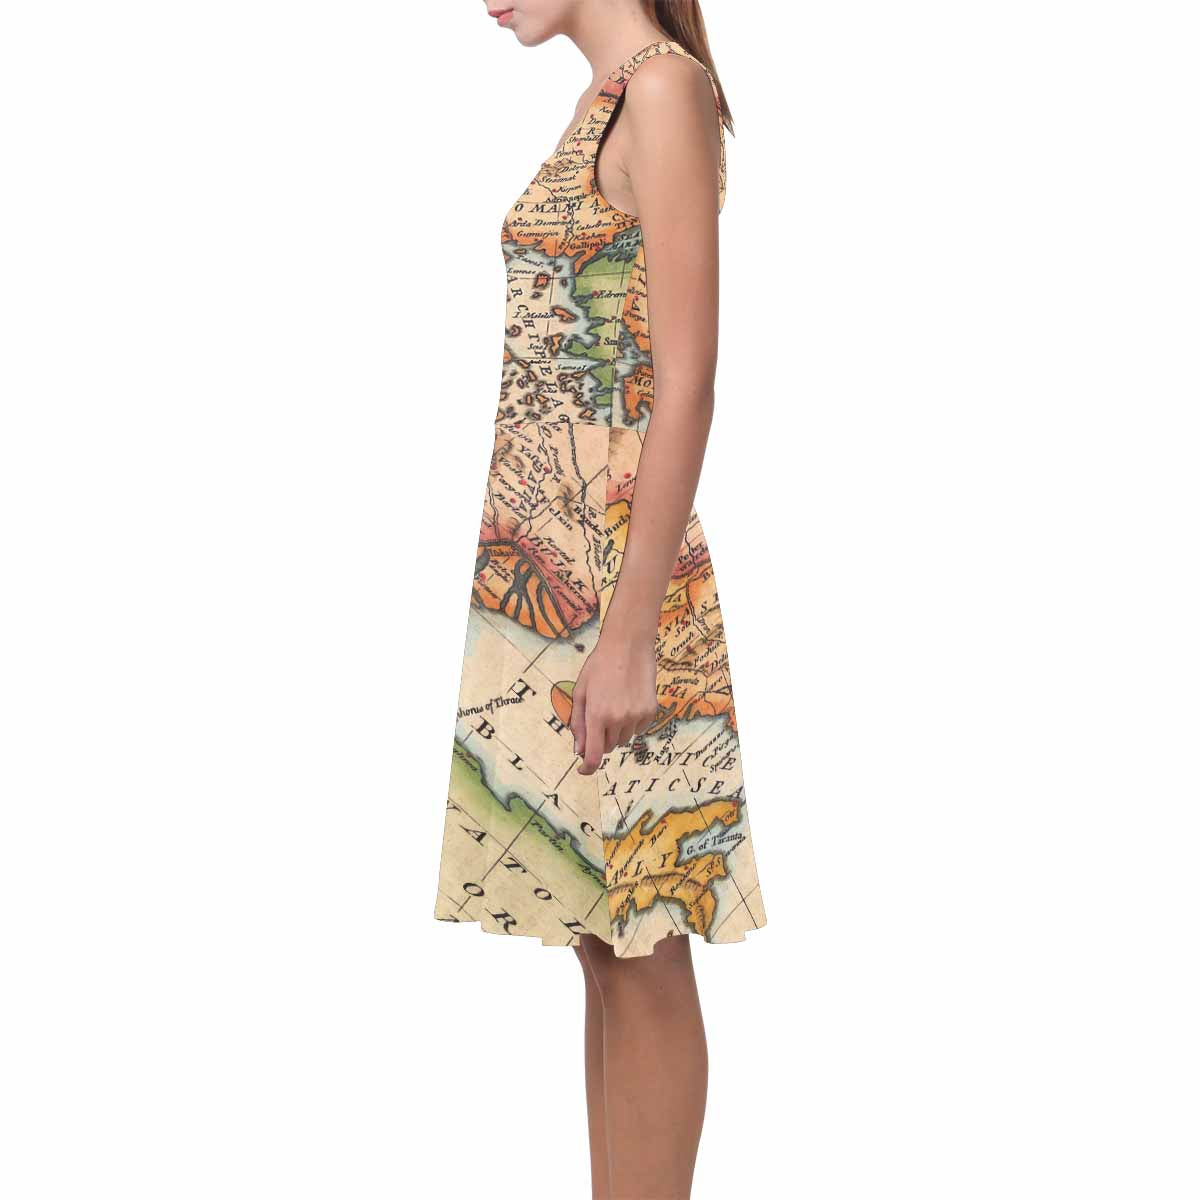 Antique Map casual summer dress, MODEL 09534, design 15